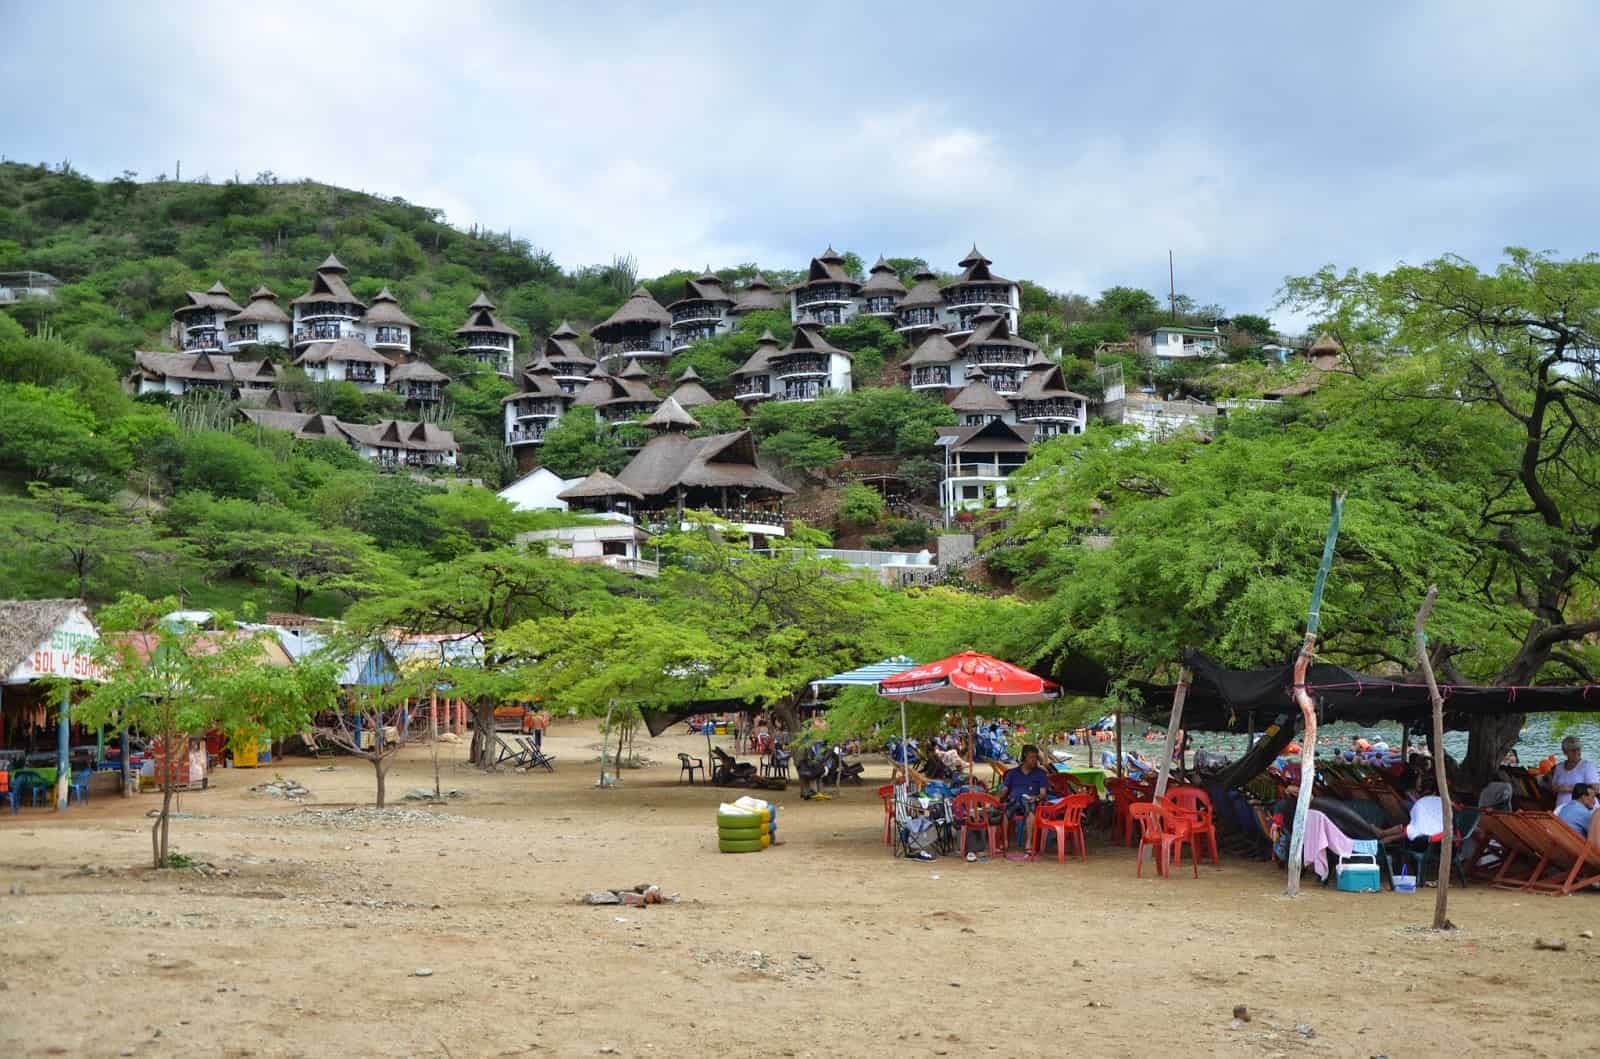 Playa Grande in Taganga, Magdalena, Colombia